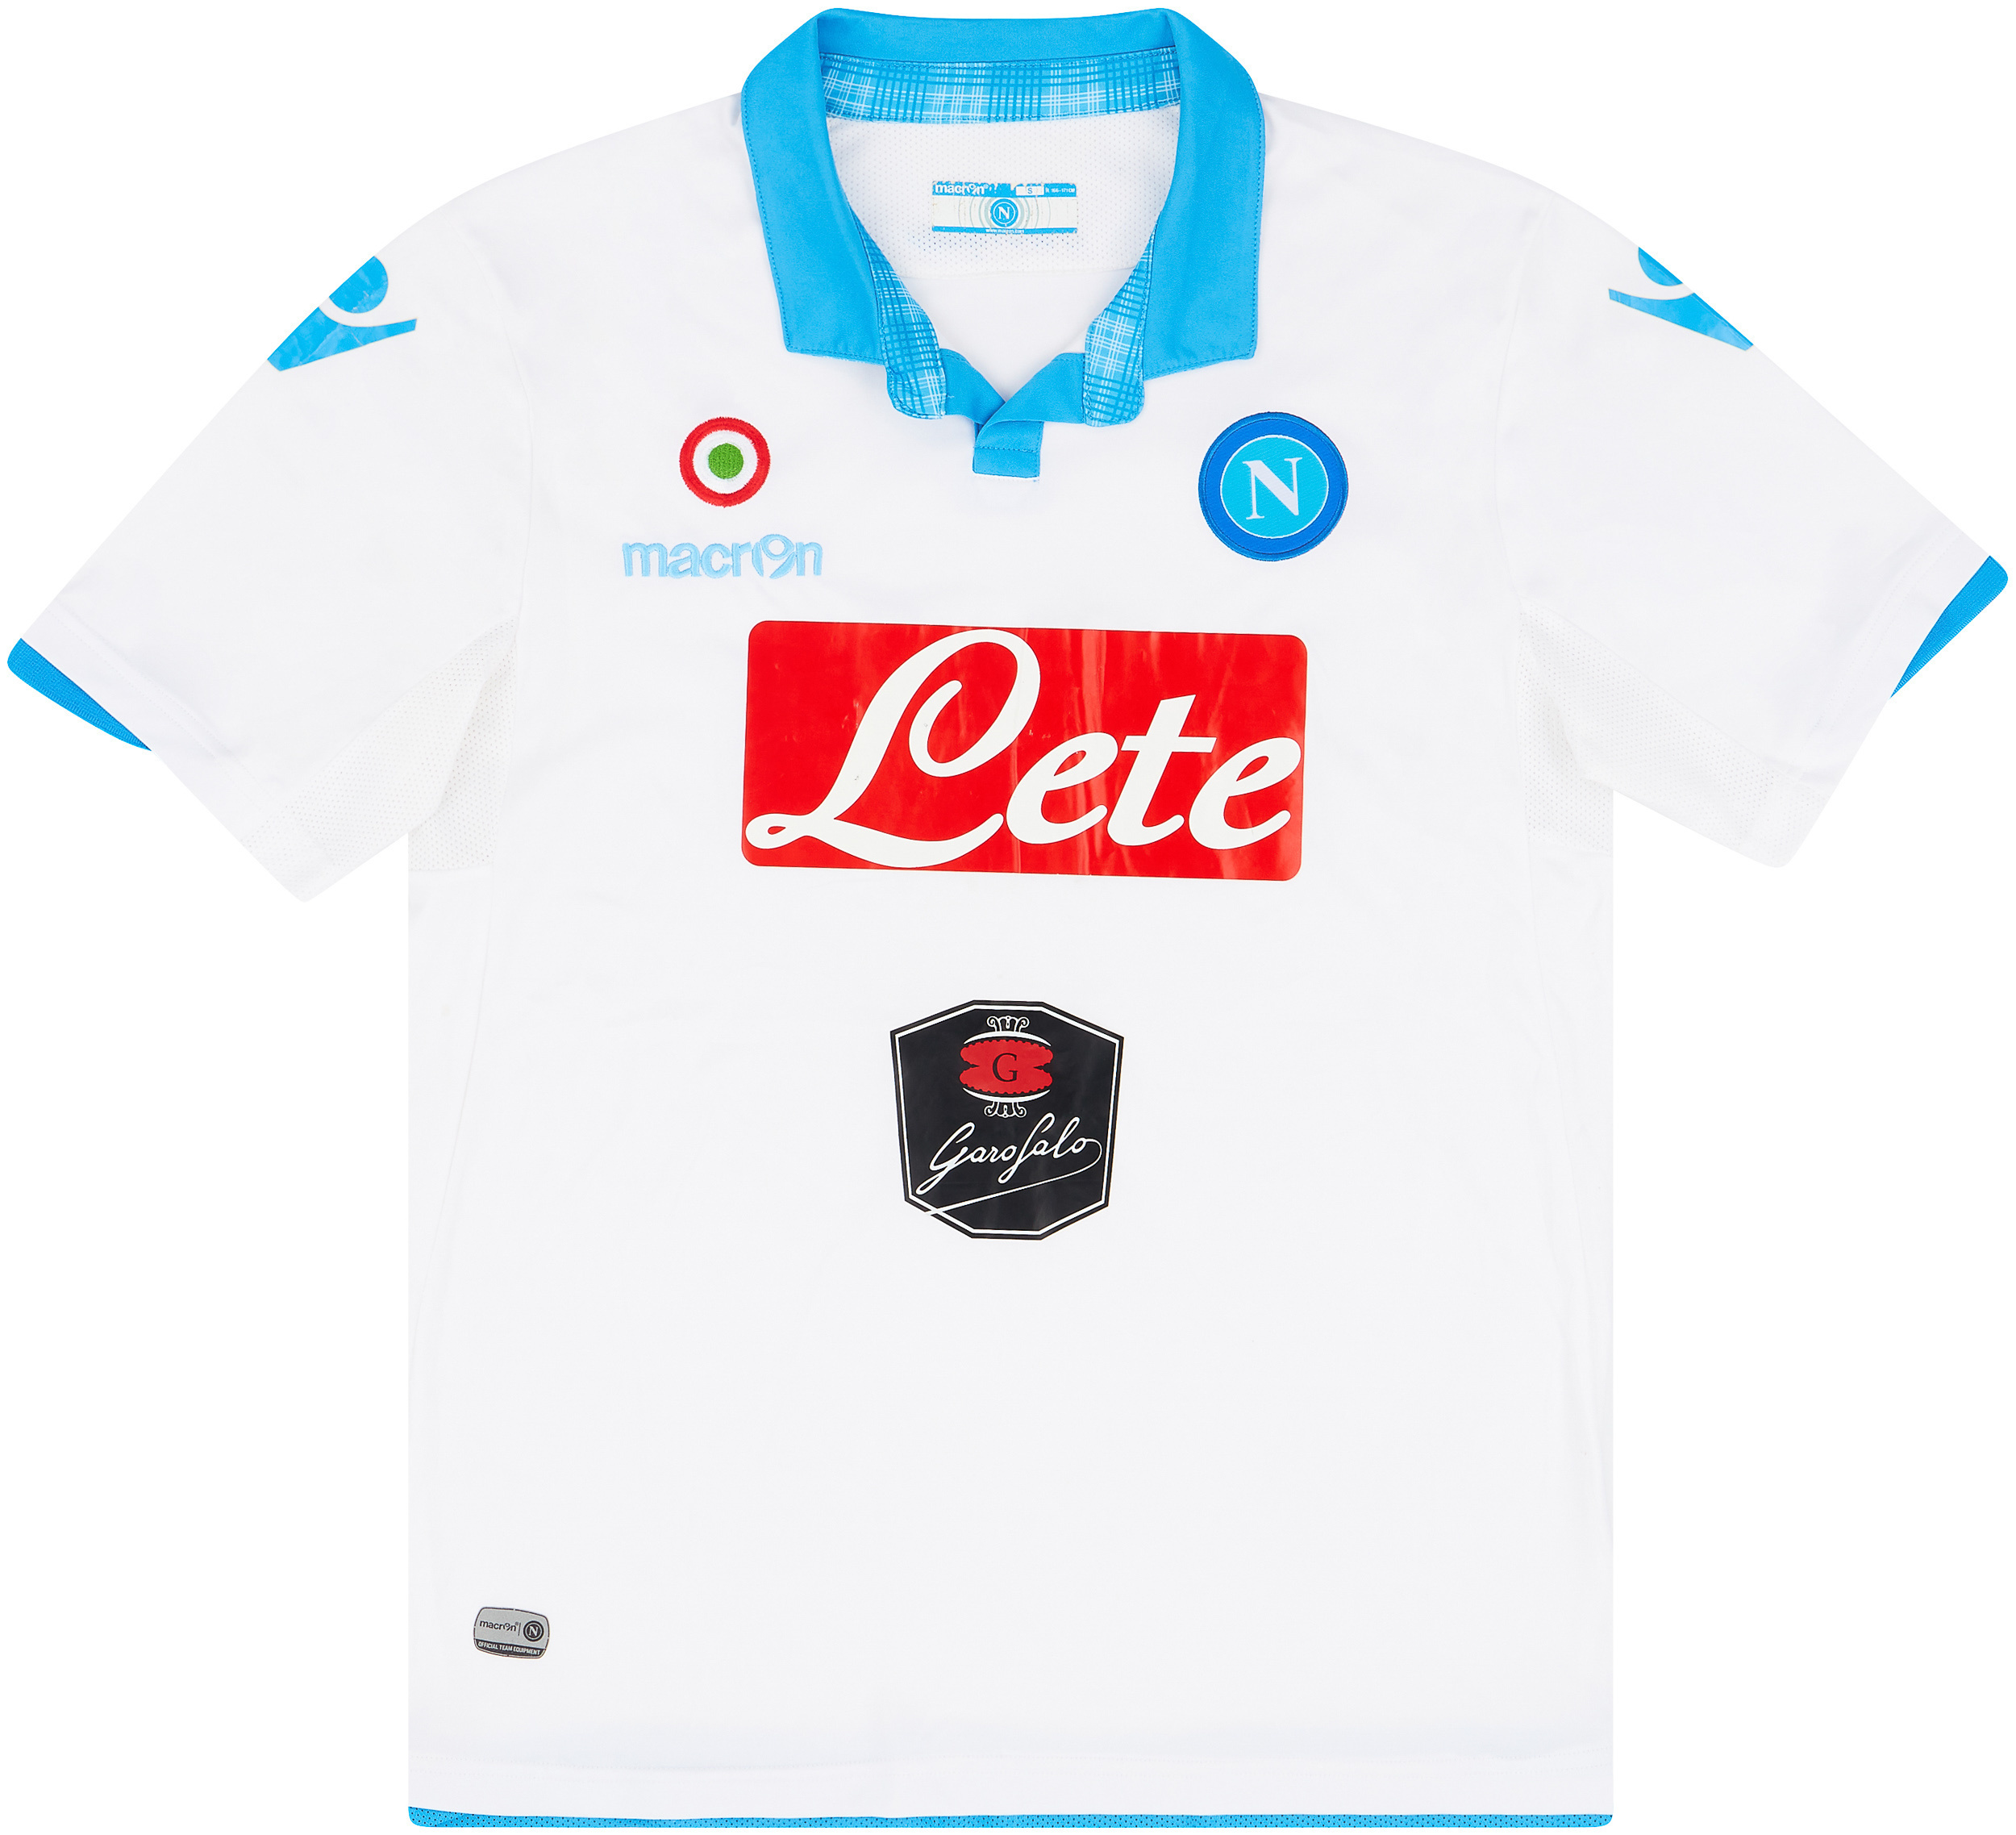 Napoli Third football shirt 2018 - 2019.